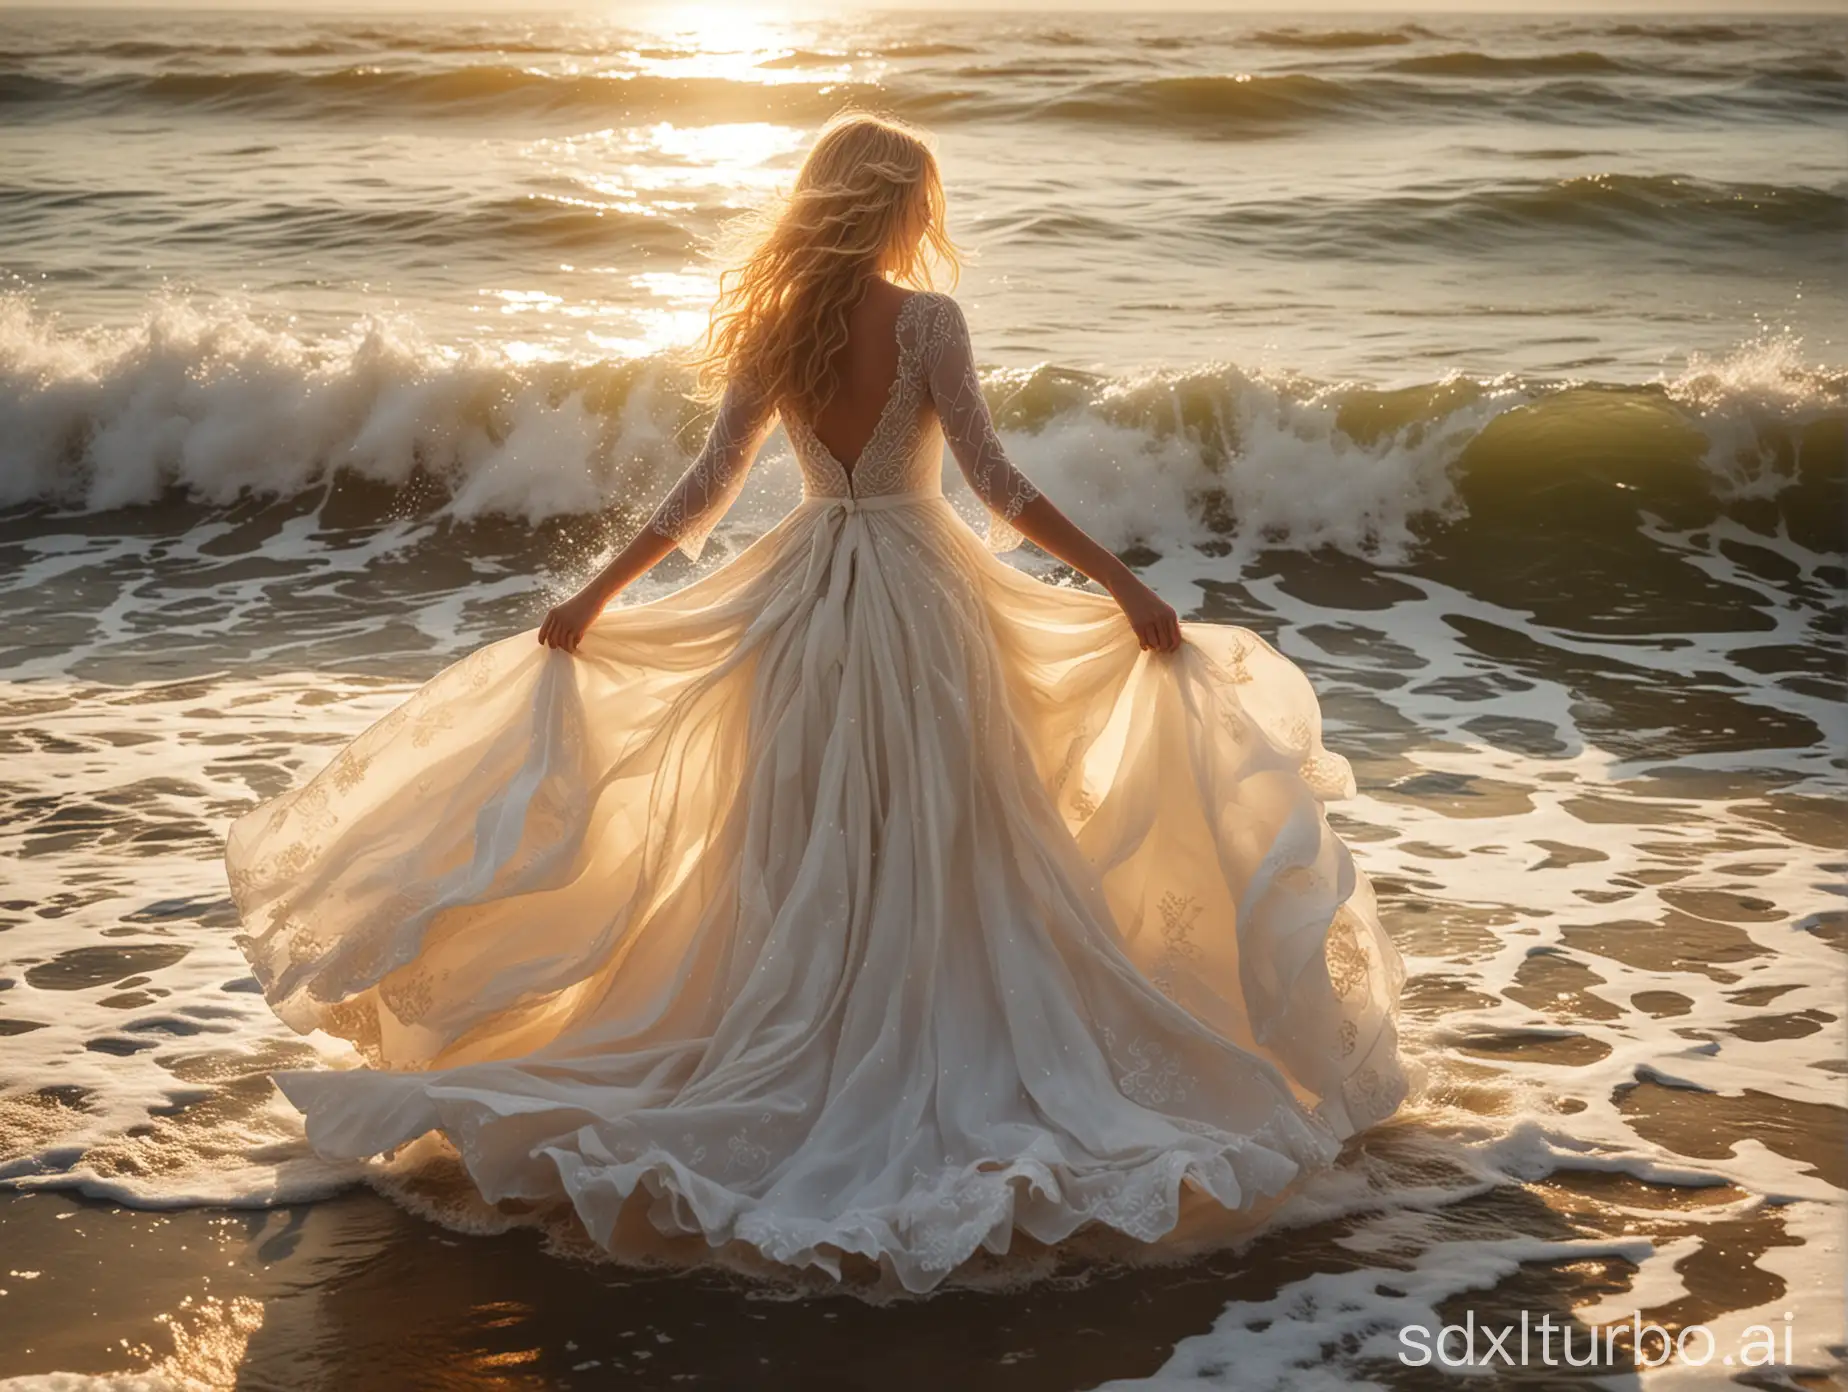 Graceful-Blonde-Girl-Dancing-in-Sunlit-Sea-Waves